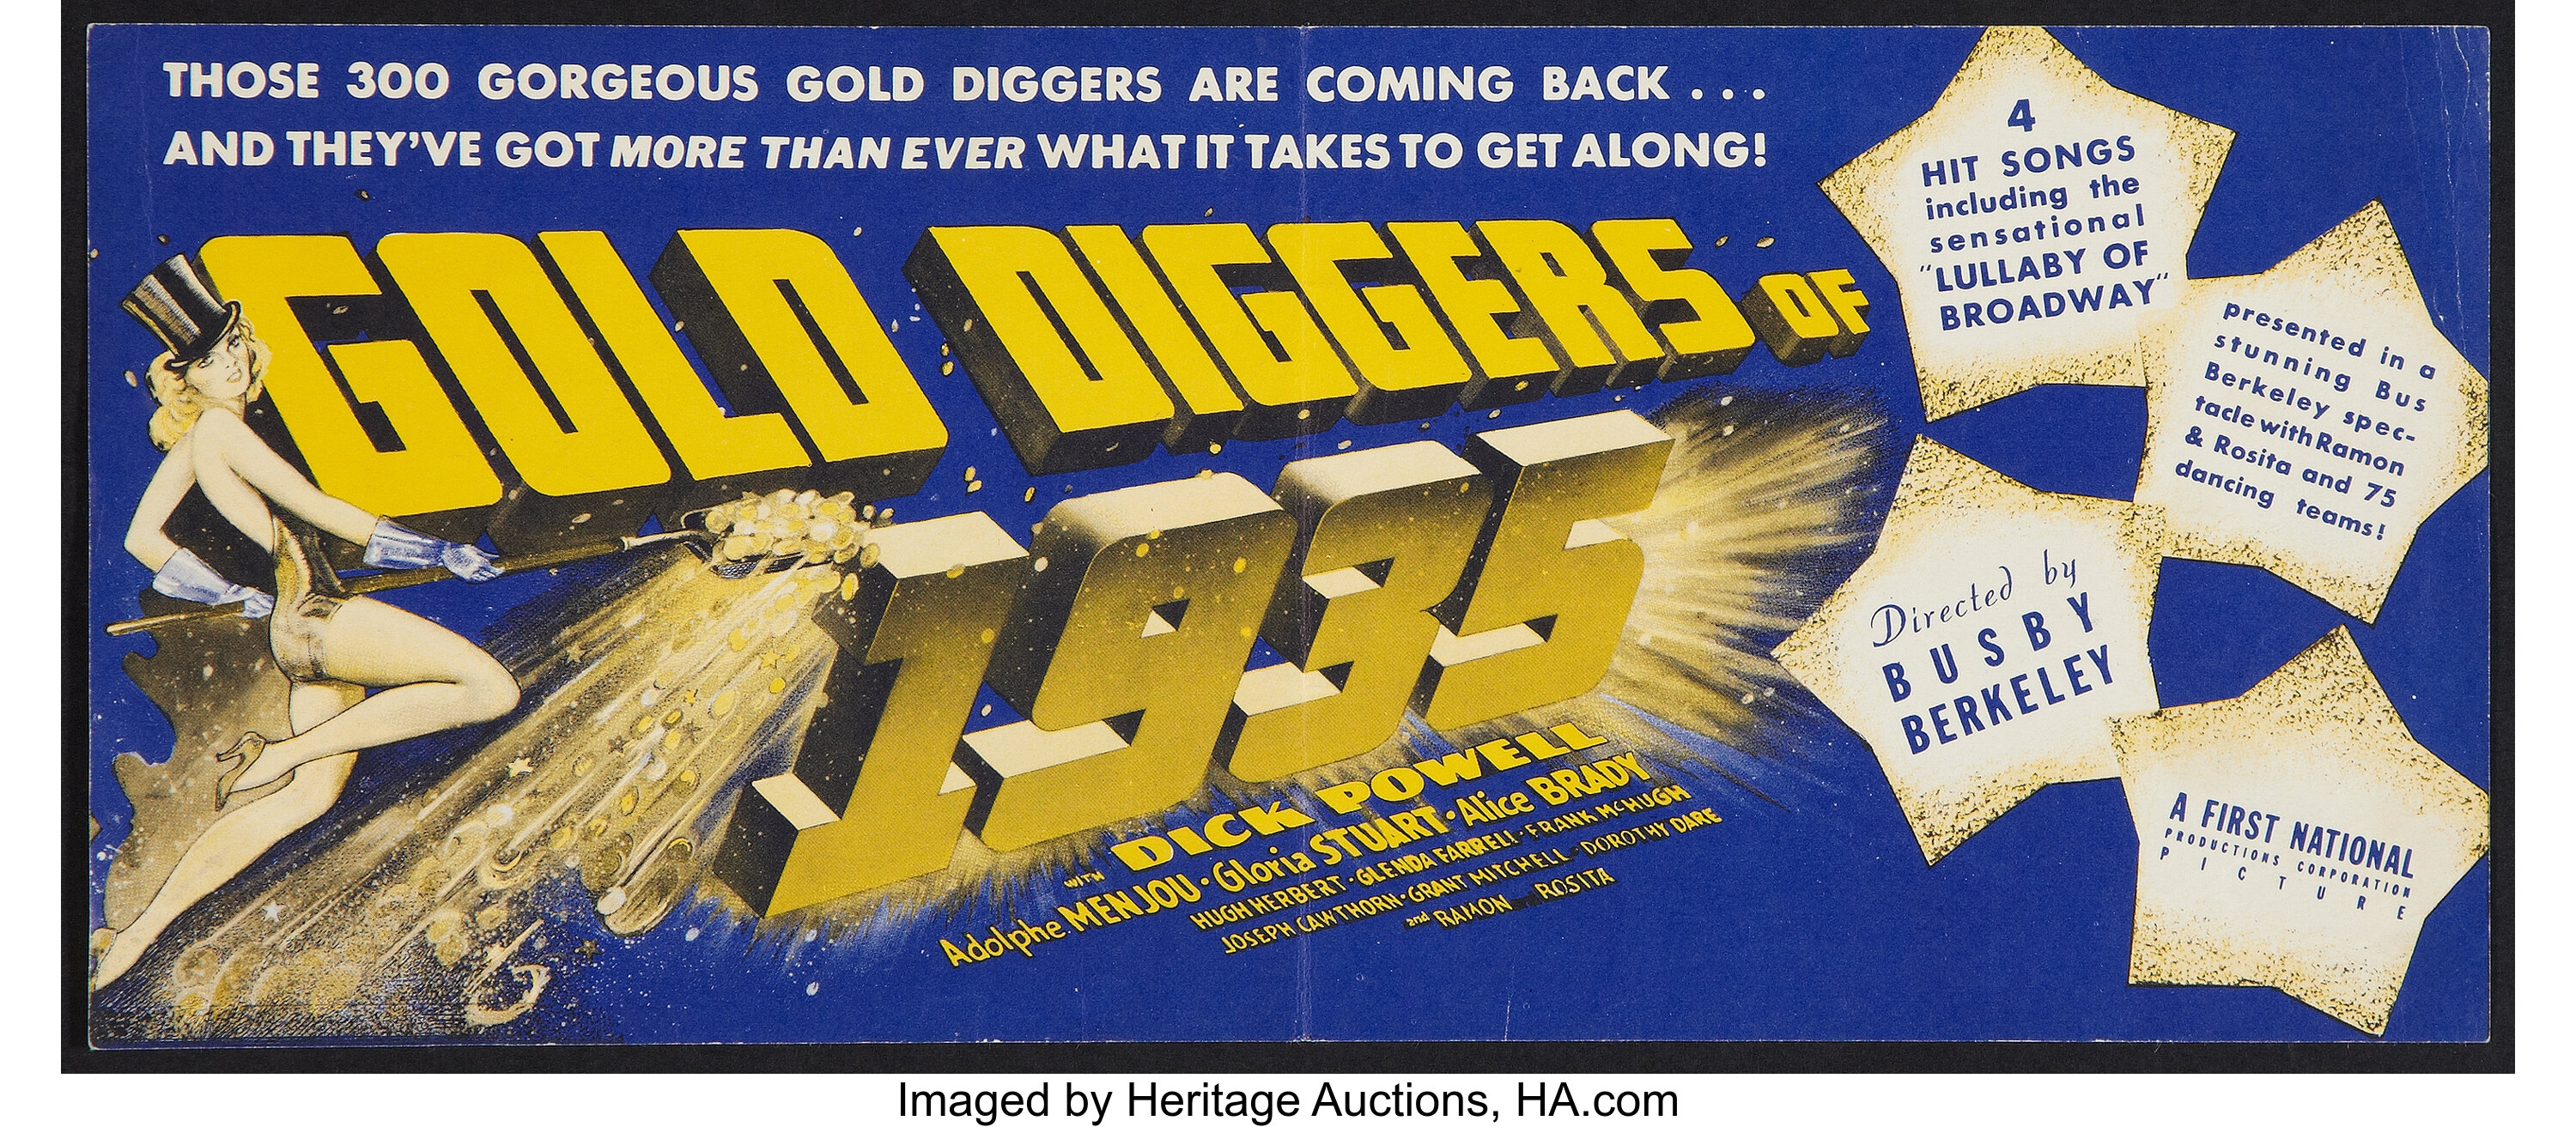 Gold Diggers of 1935, film by Berekley [1935]